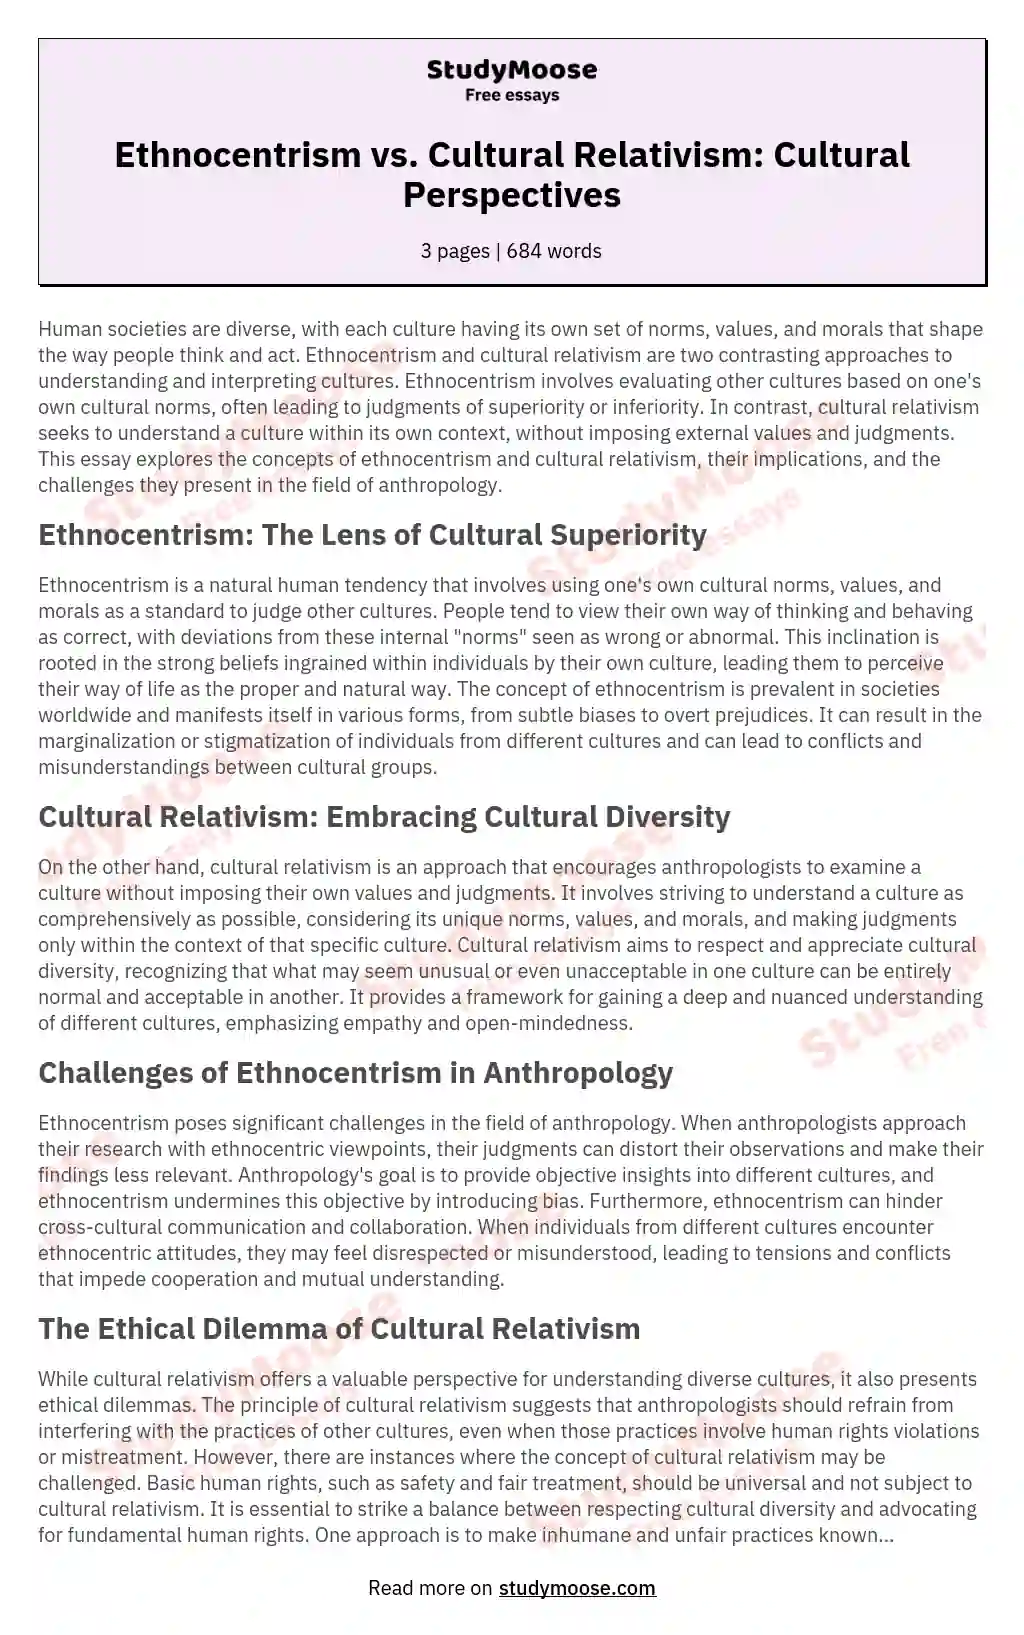 Ethnocentrism vs. Cultural Relativism: Cultural Perspectives essay